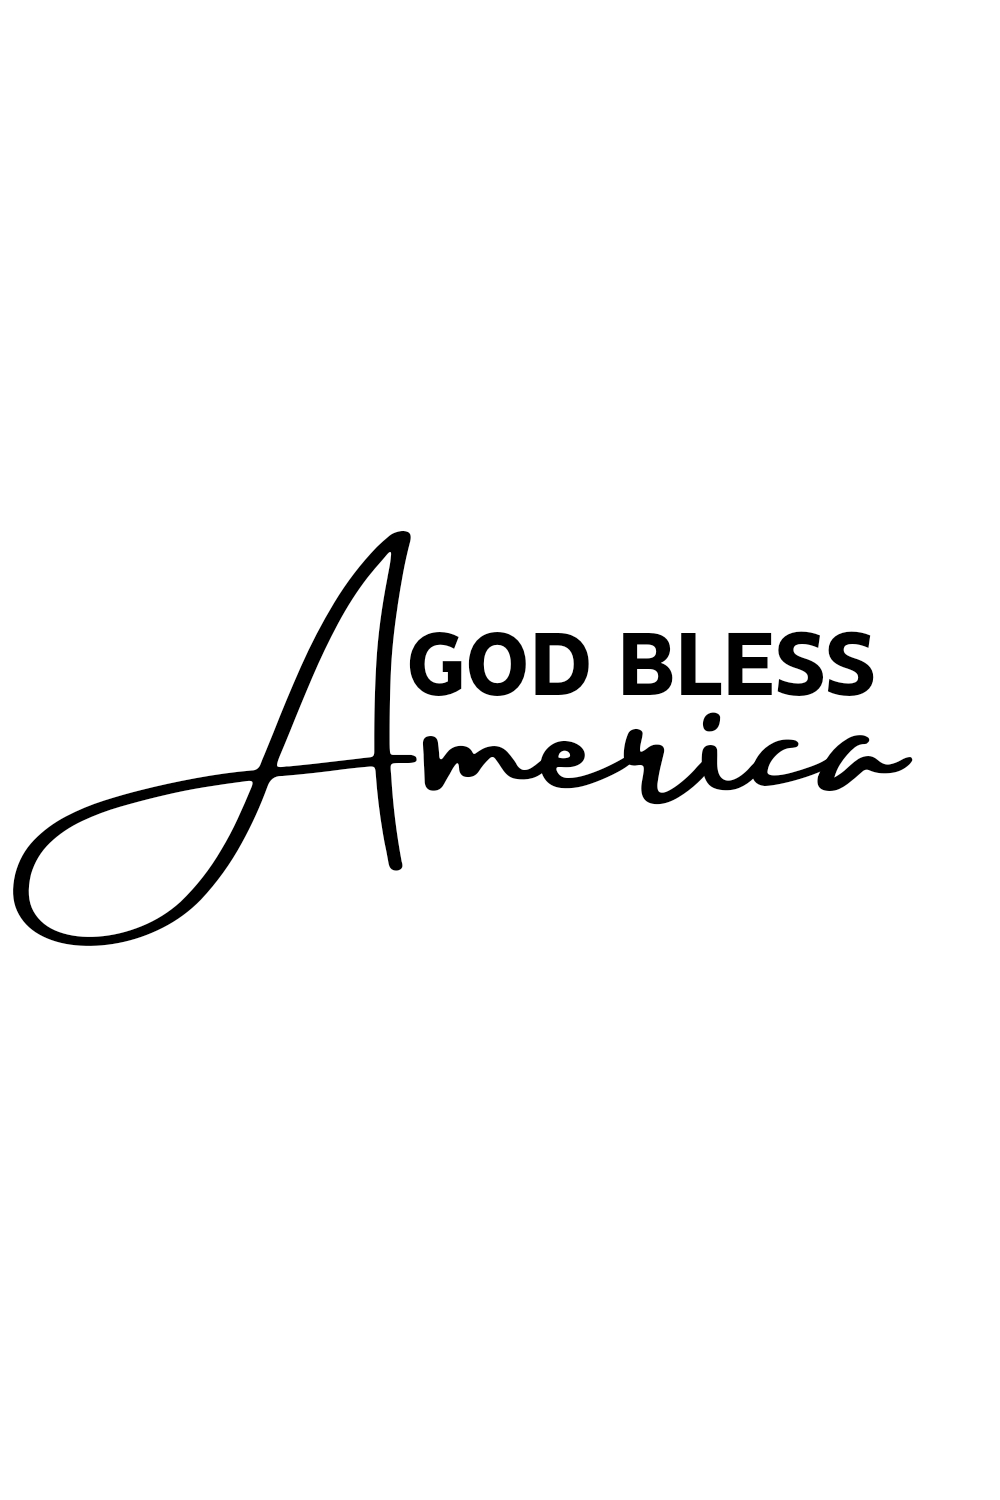 SVG for T Shirt, God bless America SVG, God bless America PNG pinterest preview image.